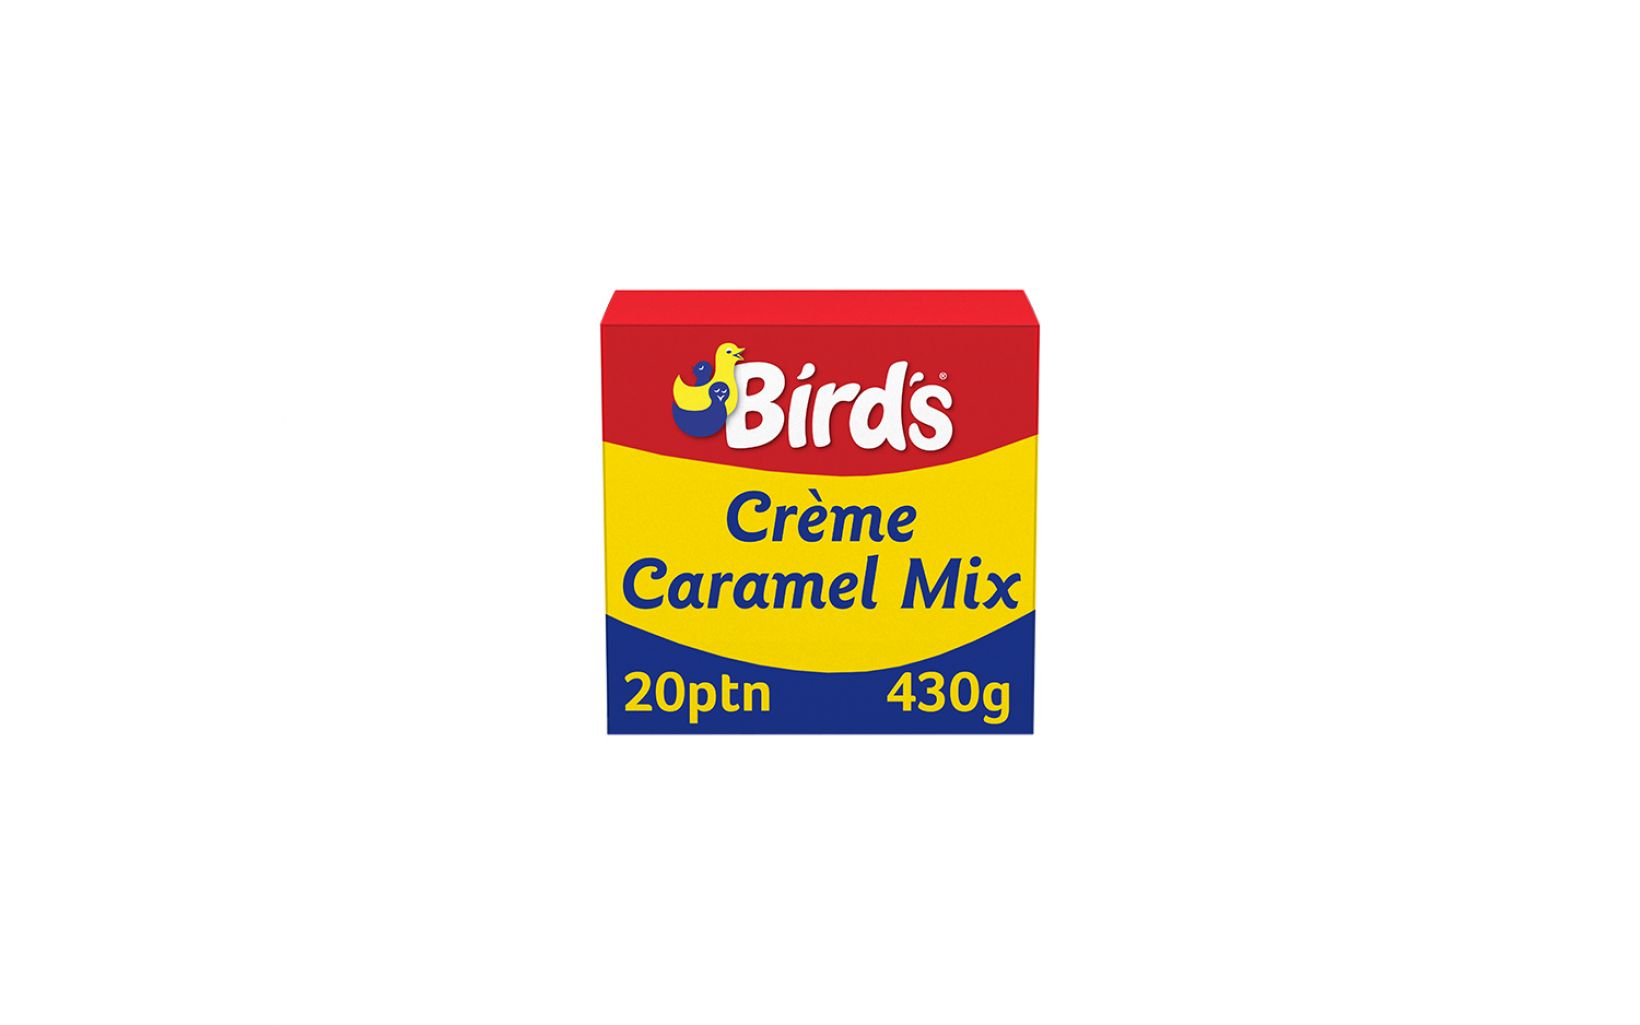 3197 Birds Creme Caramel Mix Box 20ptn 430g